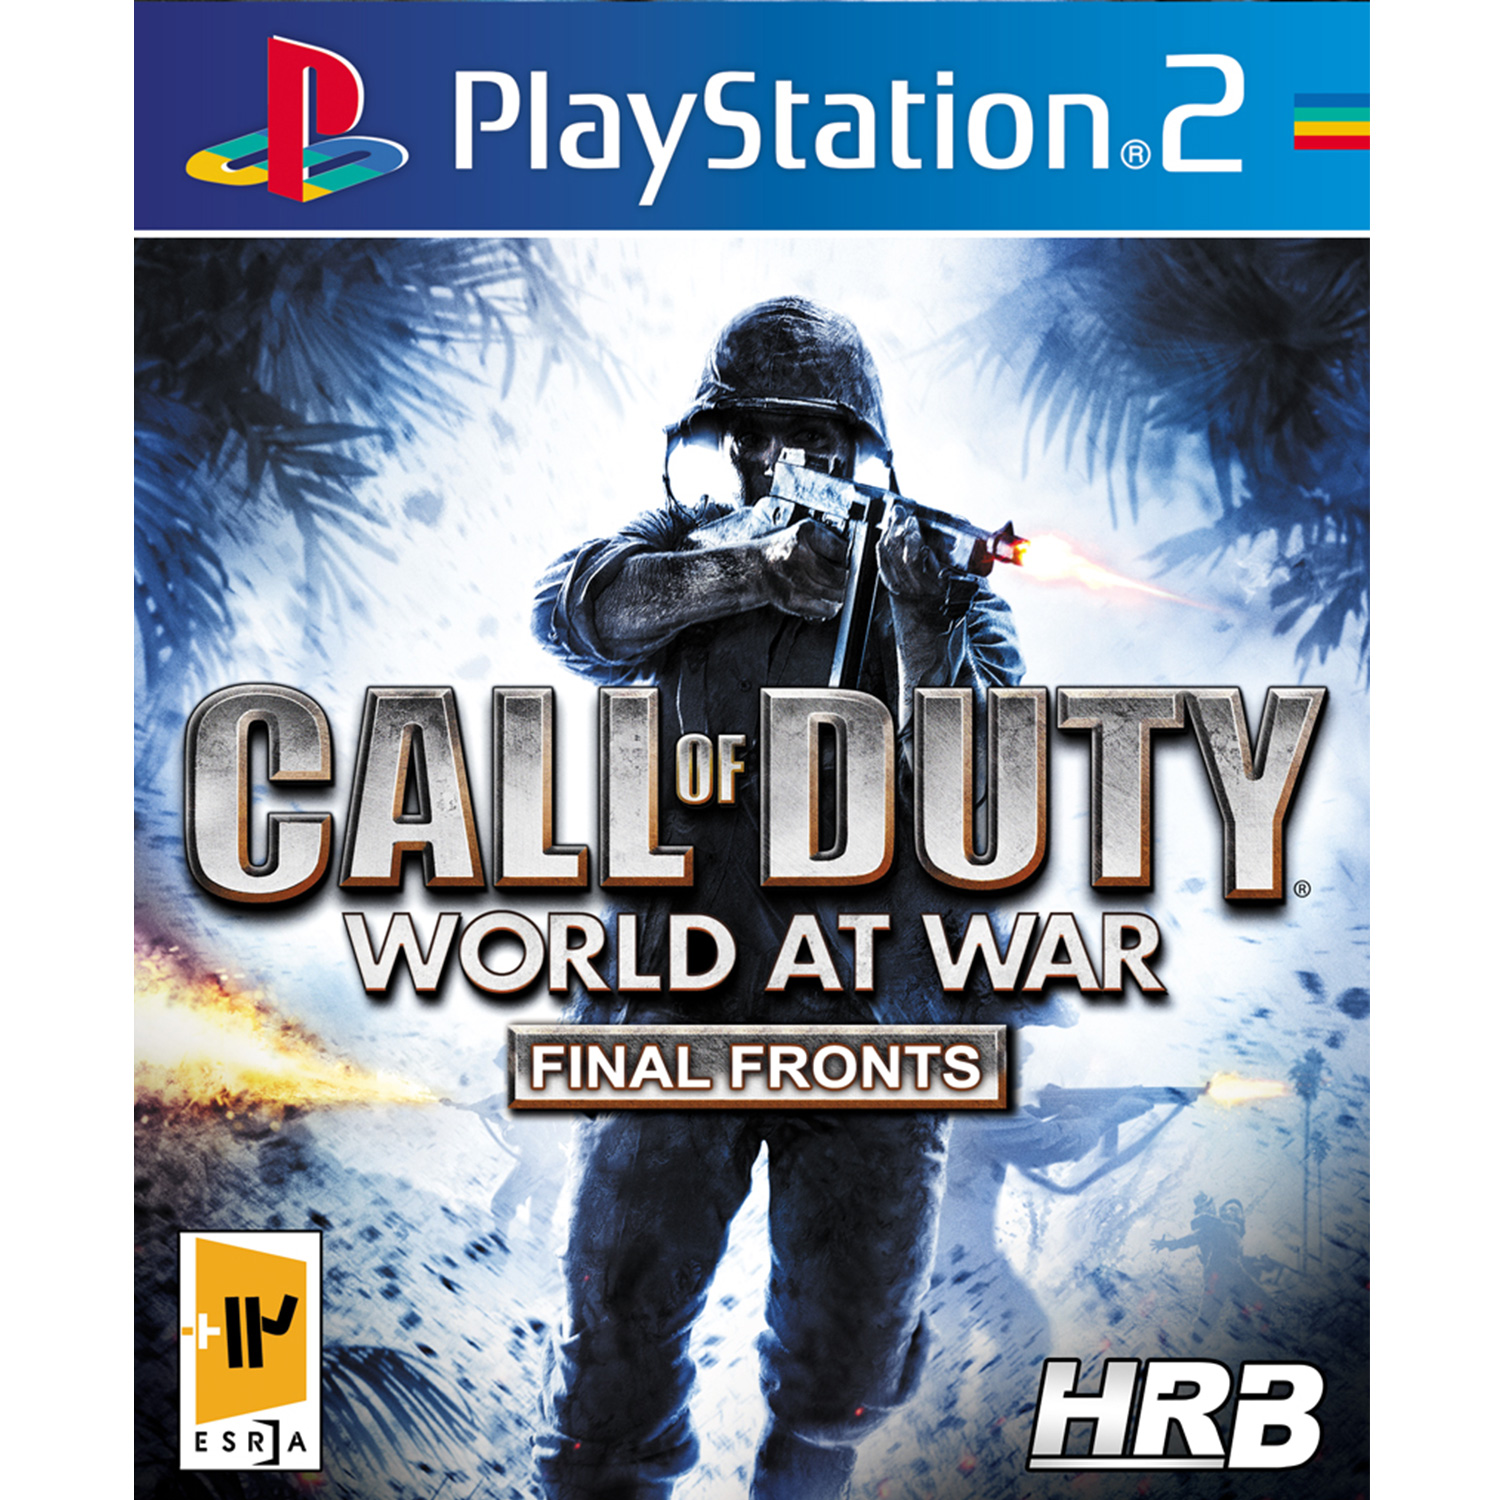 بازی Call of Duty World at War Final Fronts مخصوص PS2